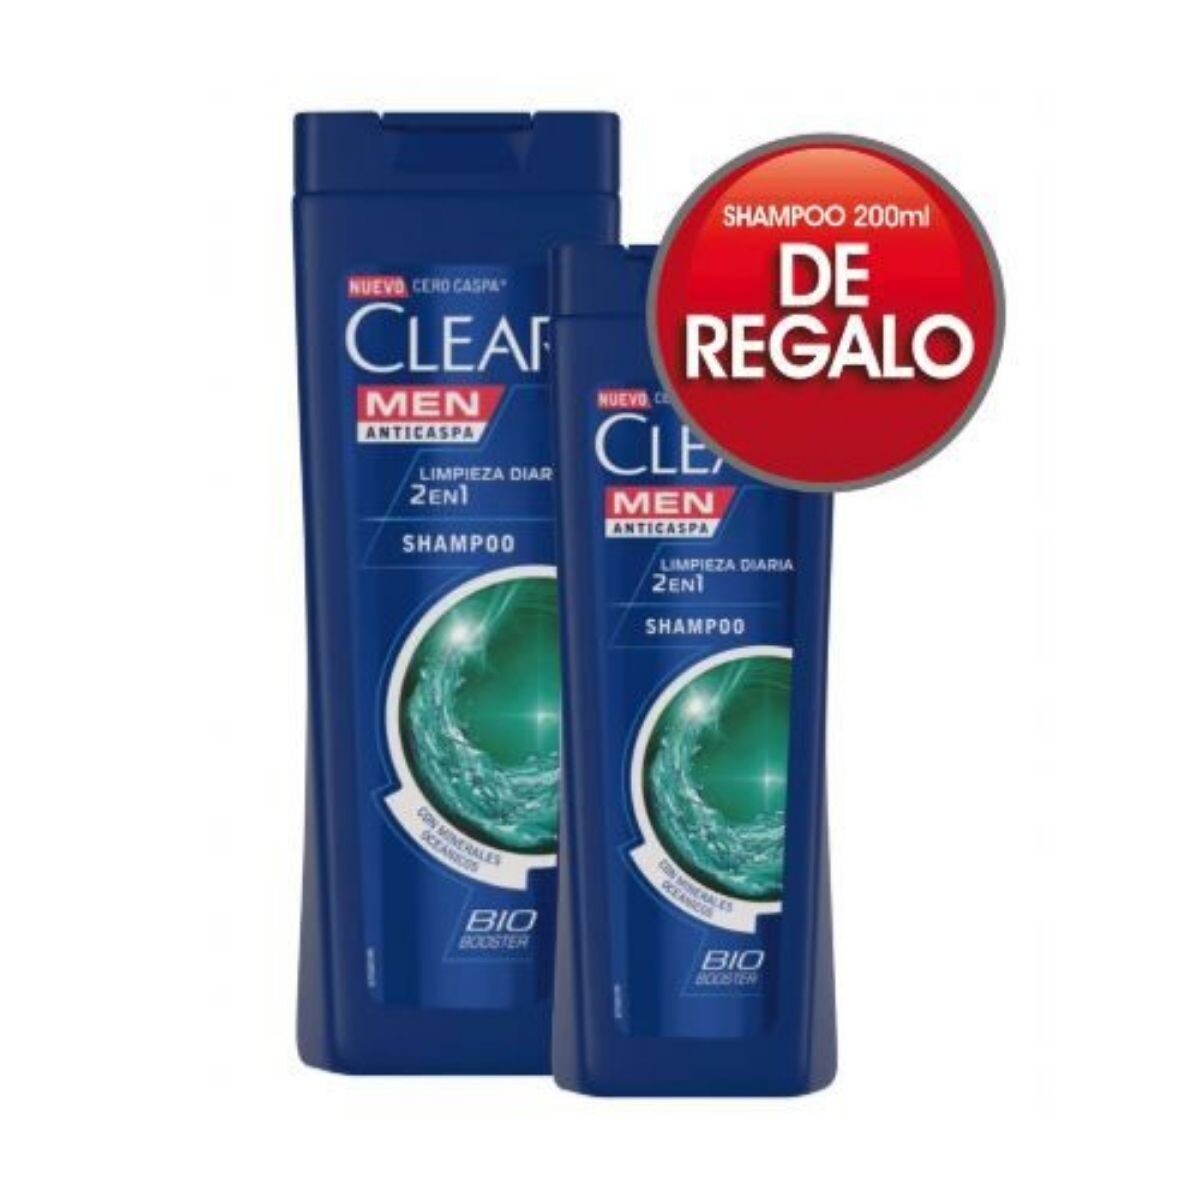 Shampoo Clear Anticaspa Men 2EN1 - Pack Ahorro 400 ML + 200 DE REGALO 